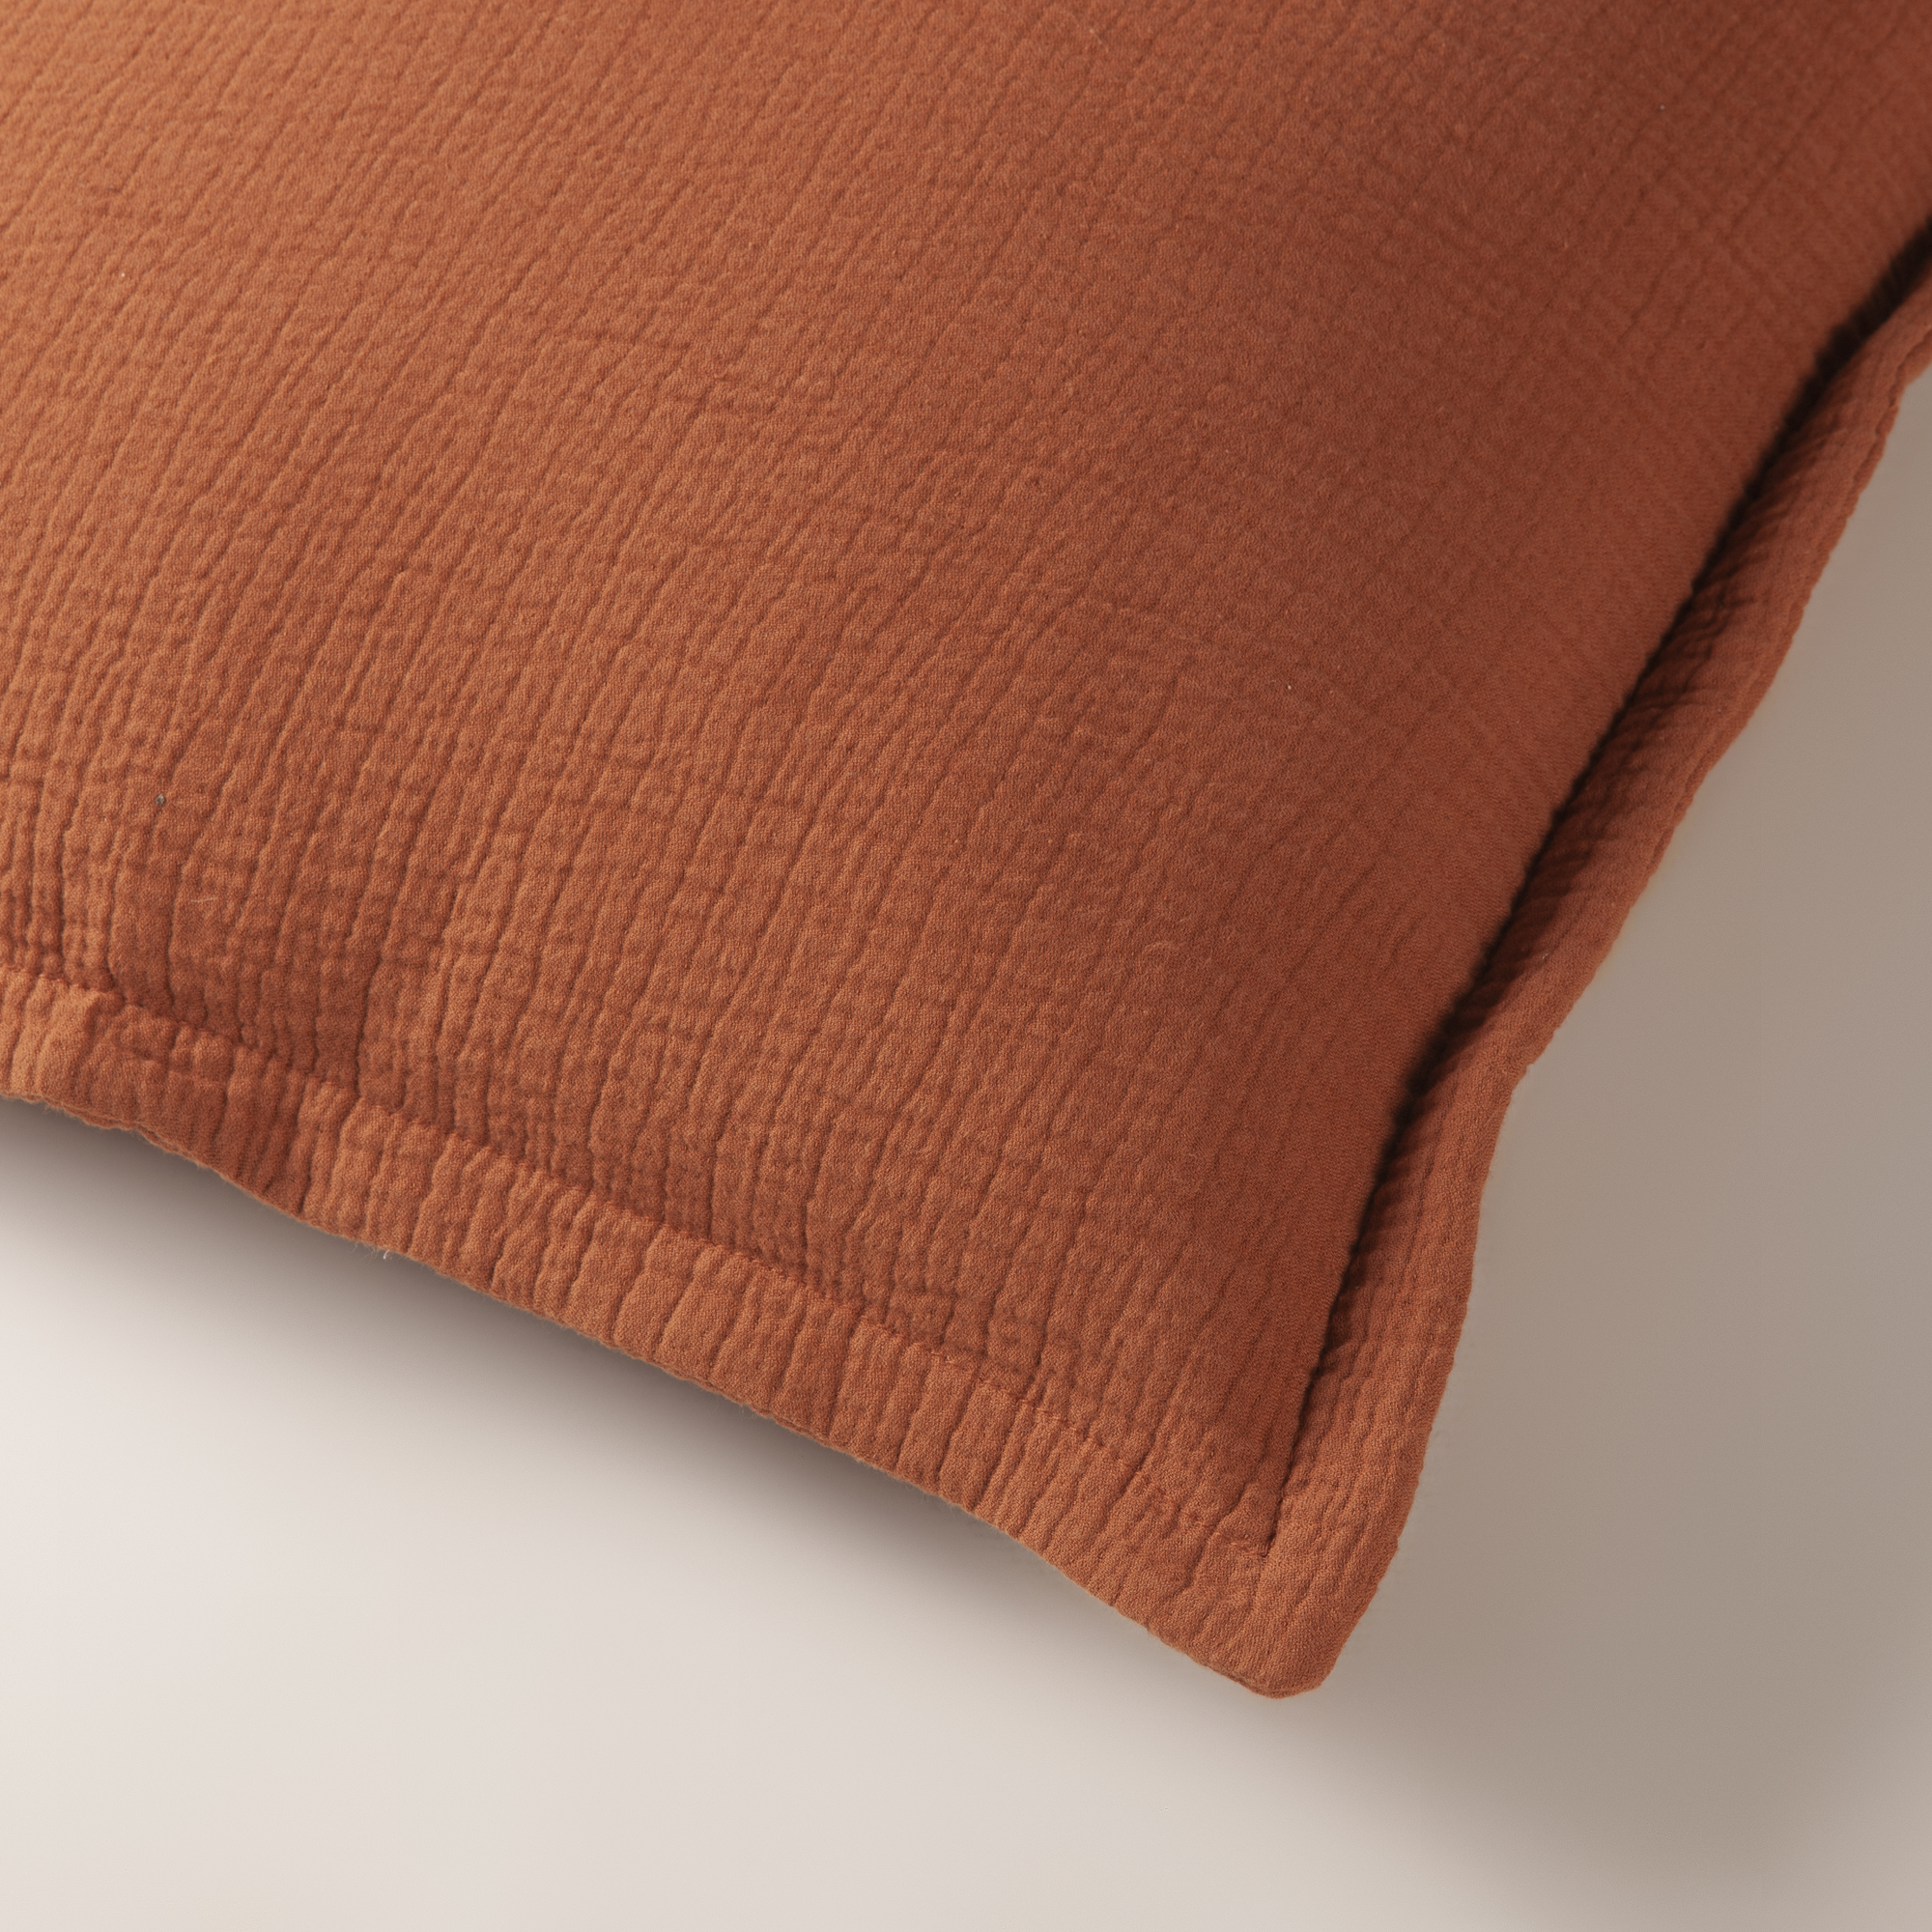 The Linen Company Accessories 16X16 Terracotta Cotton Muslin Cushion Cover